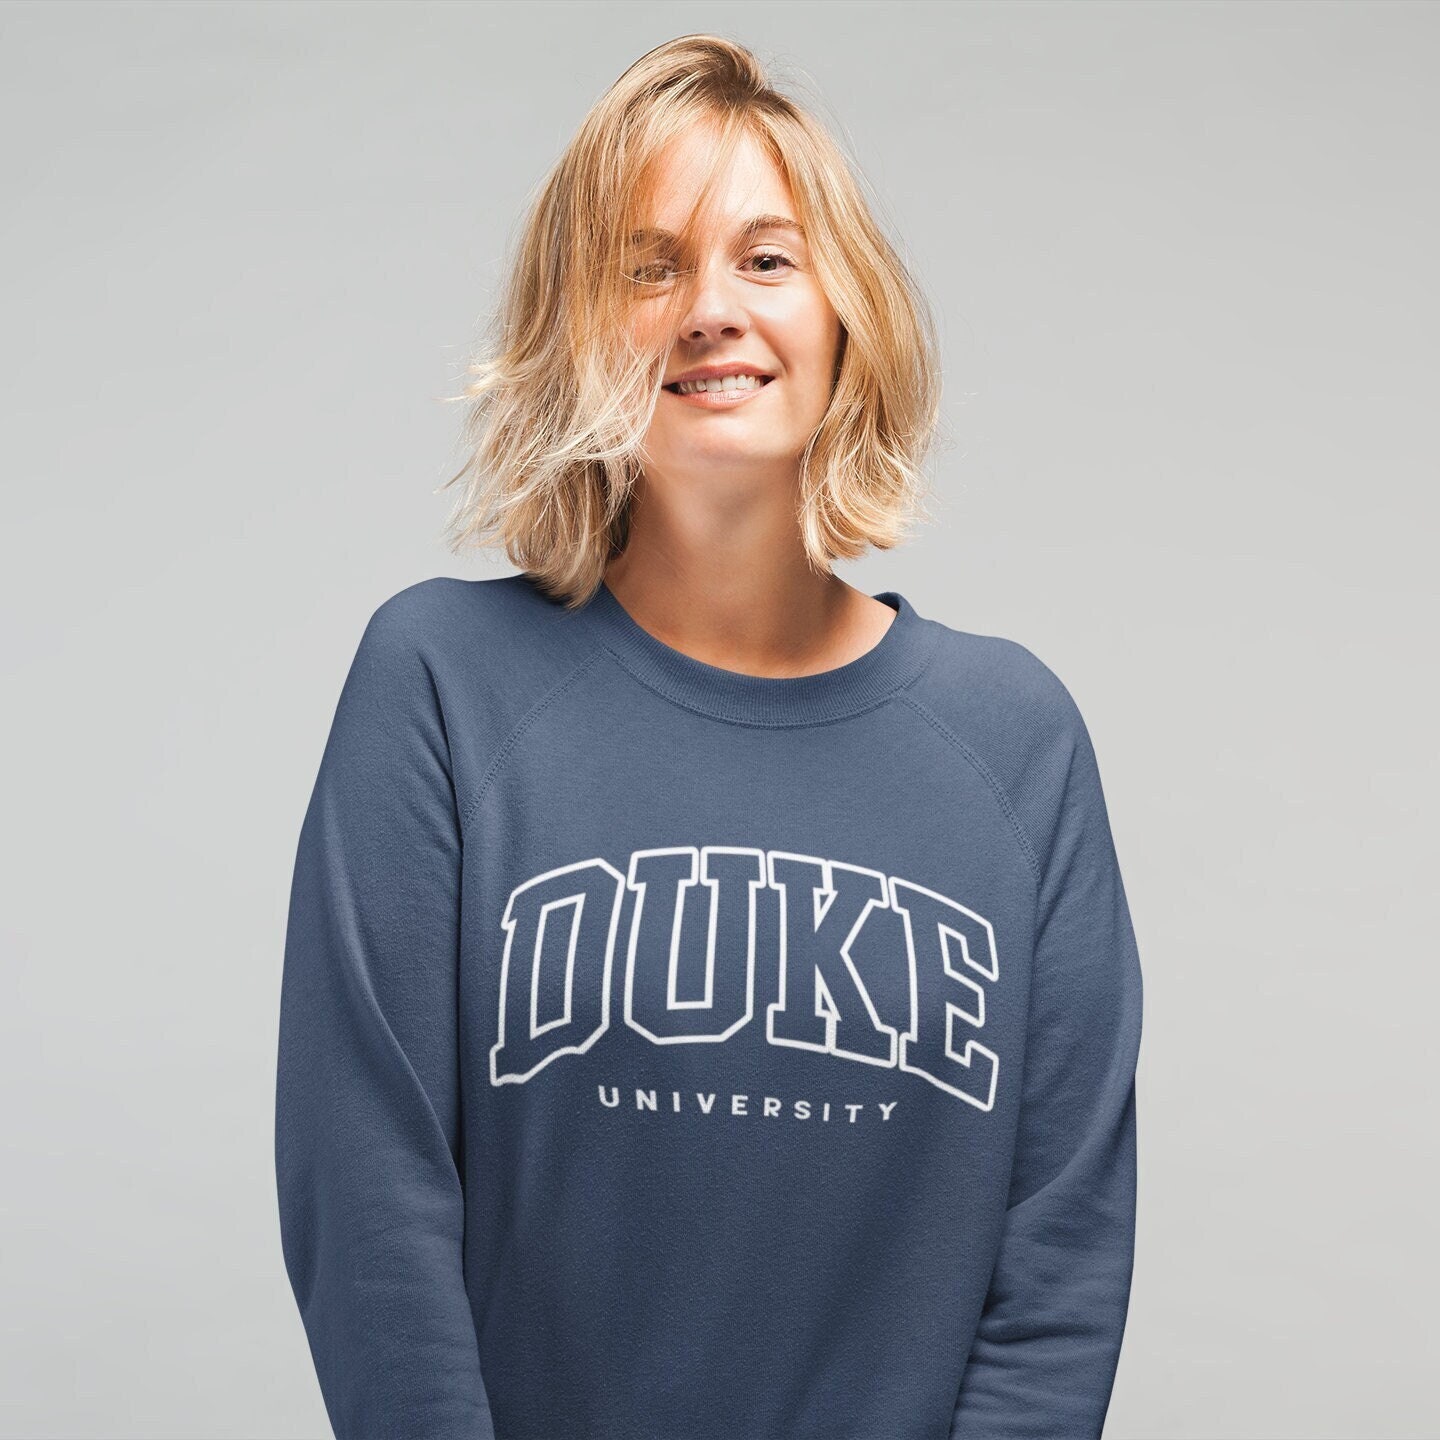 Gothic Duke® Crewneck Sweatshirt